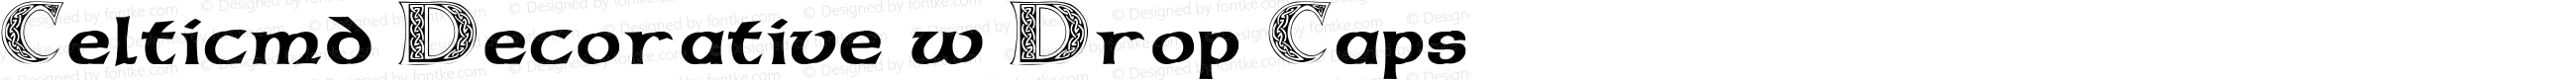 Celticmd Decorative w Drop Caps